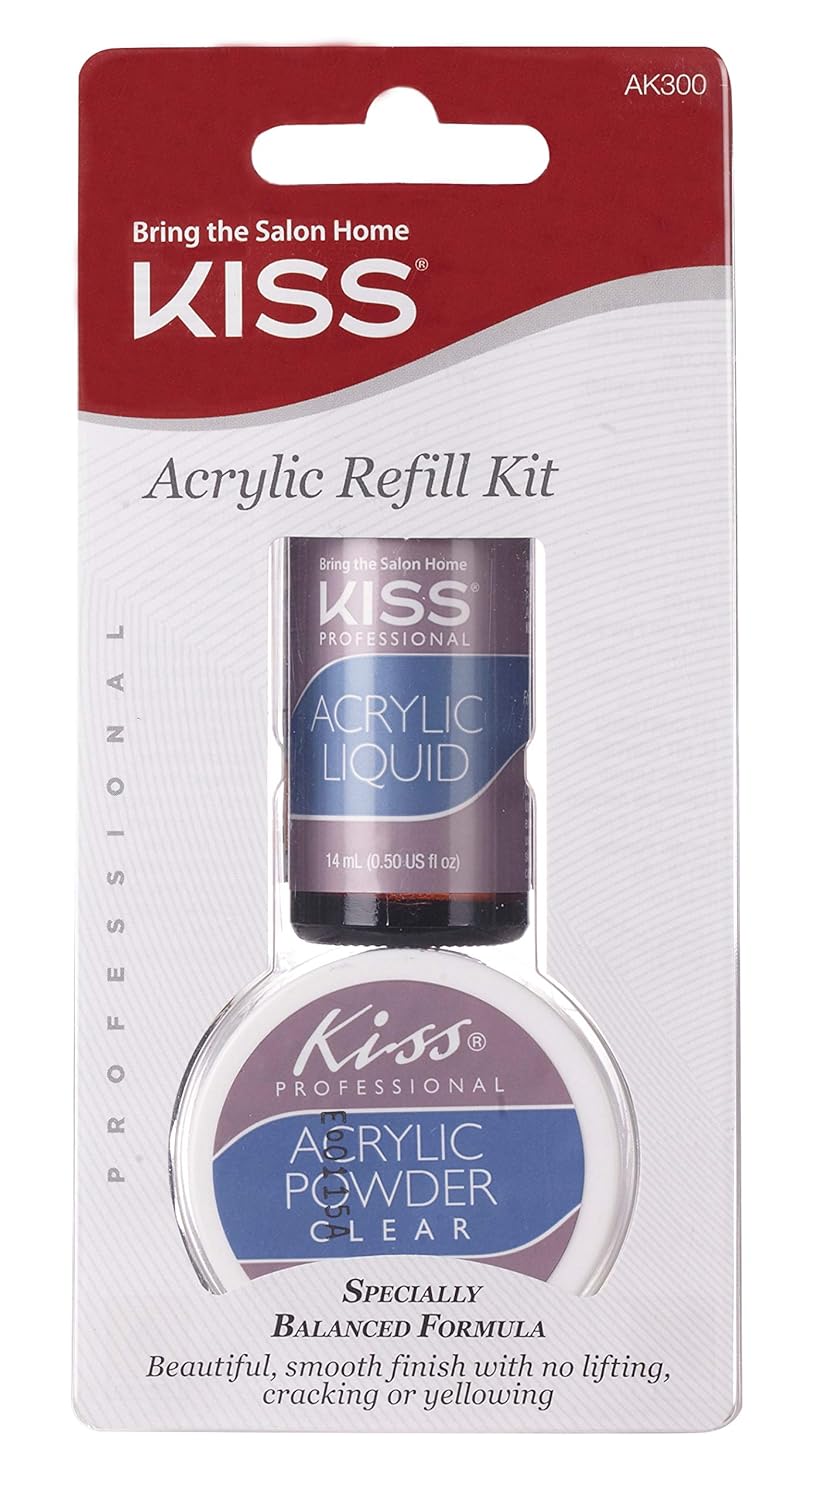 Kiss Acrylic Refill Kit Small, 0.50 Oz (AK300)